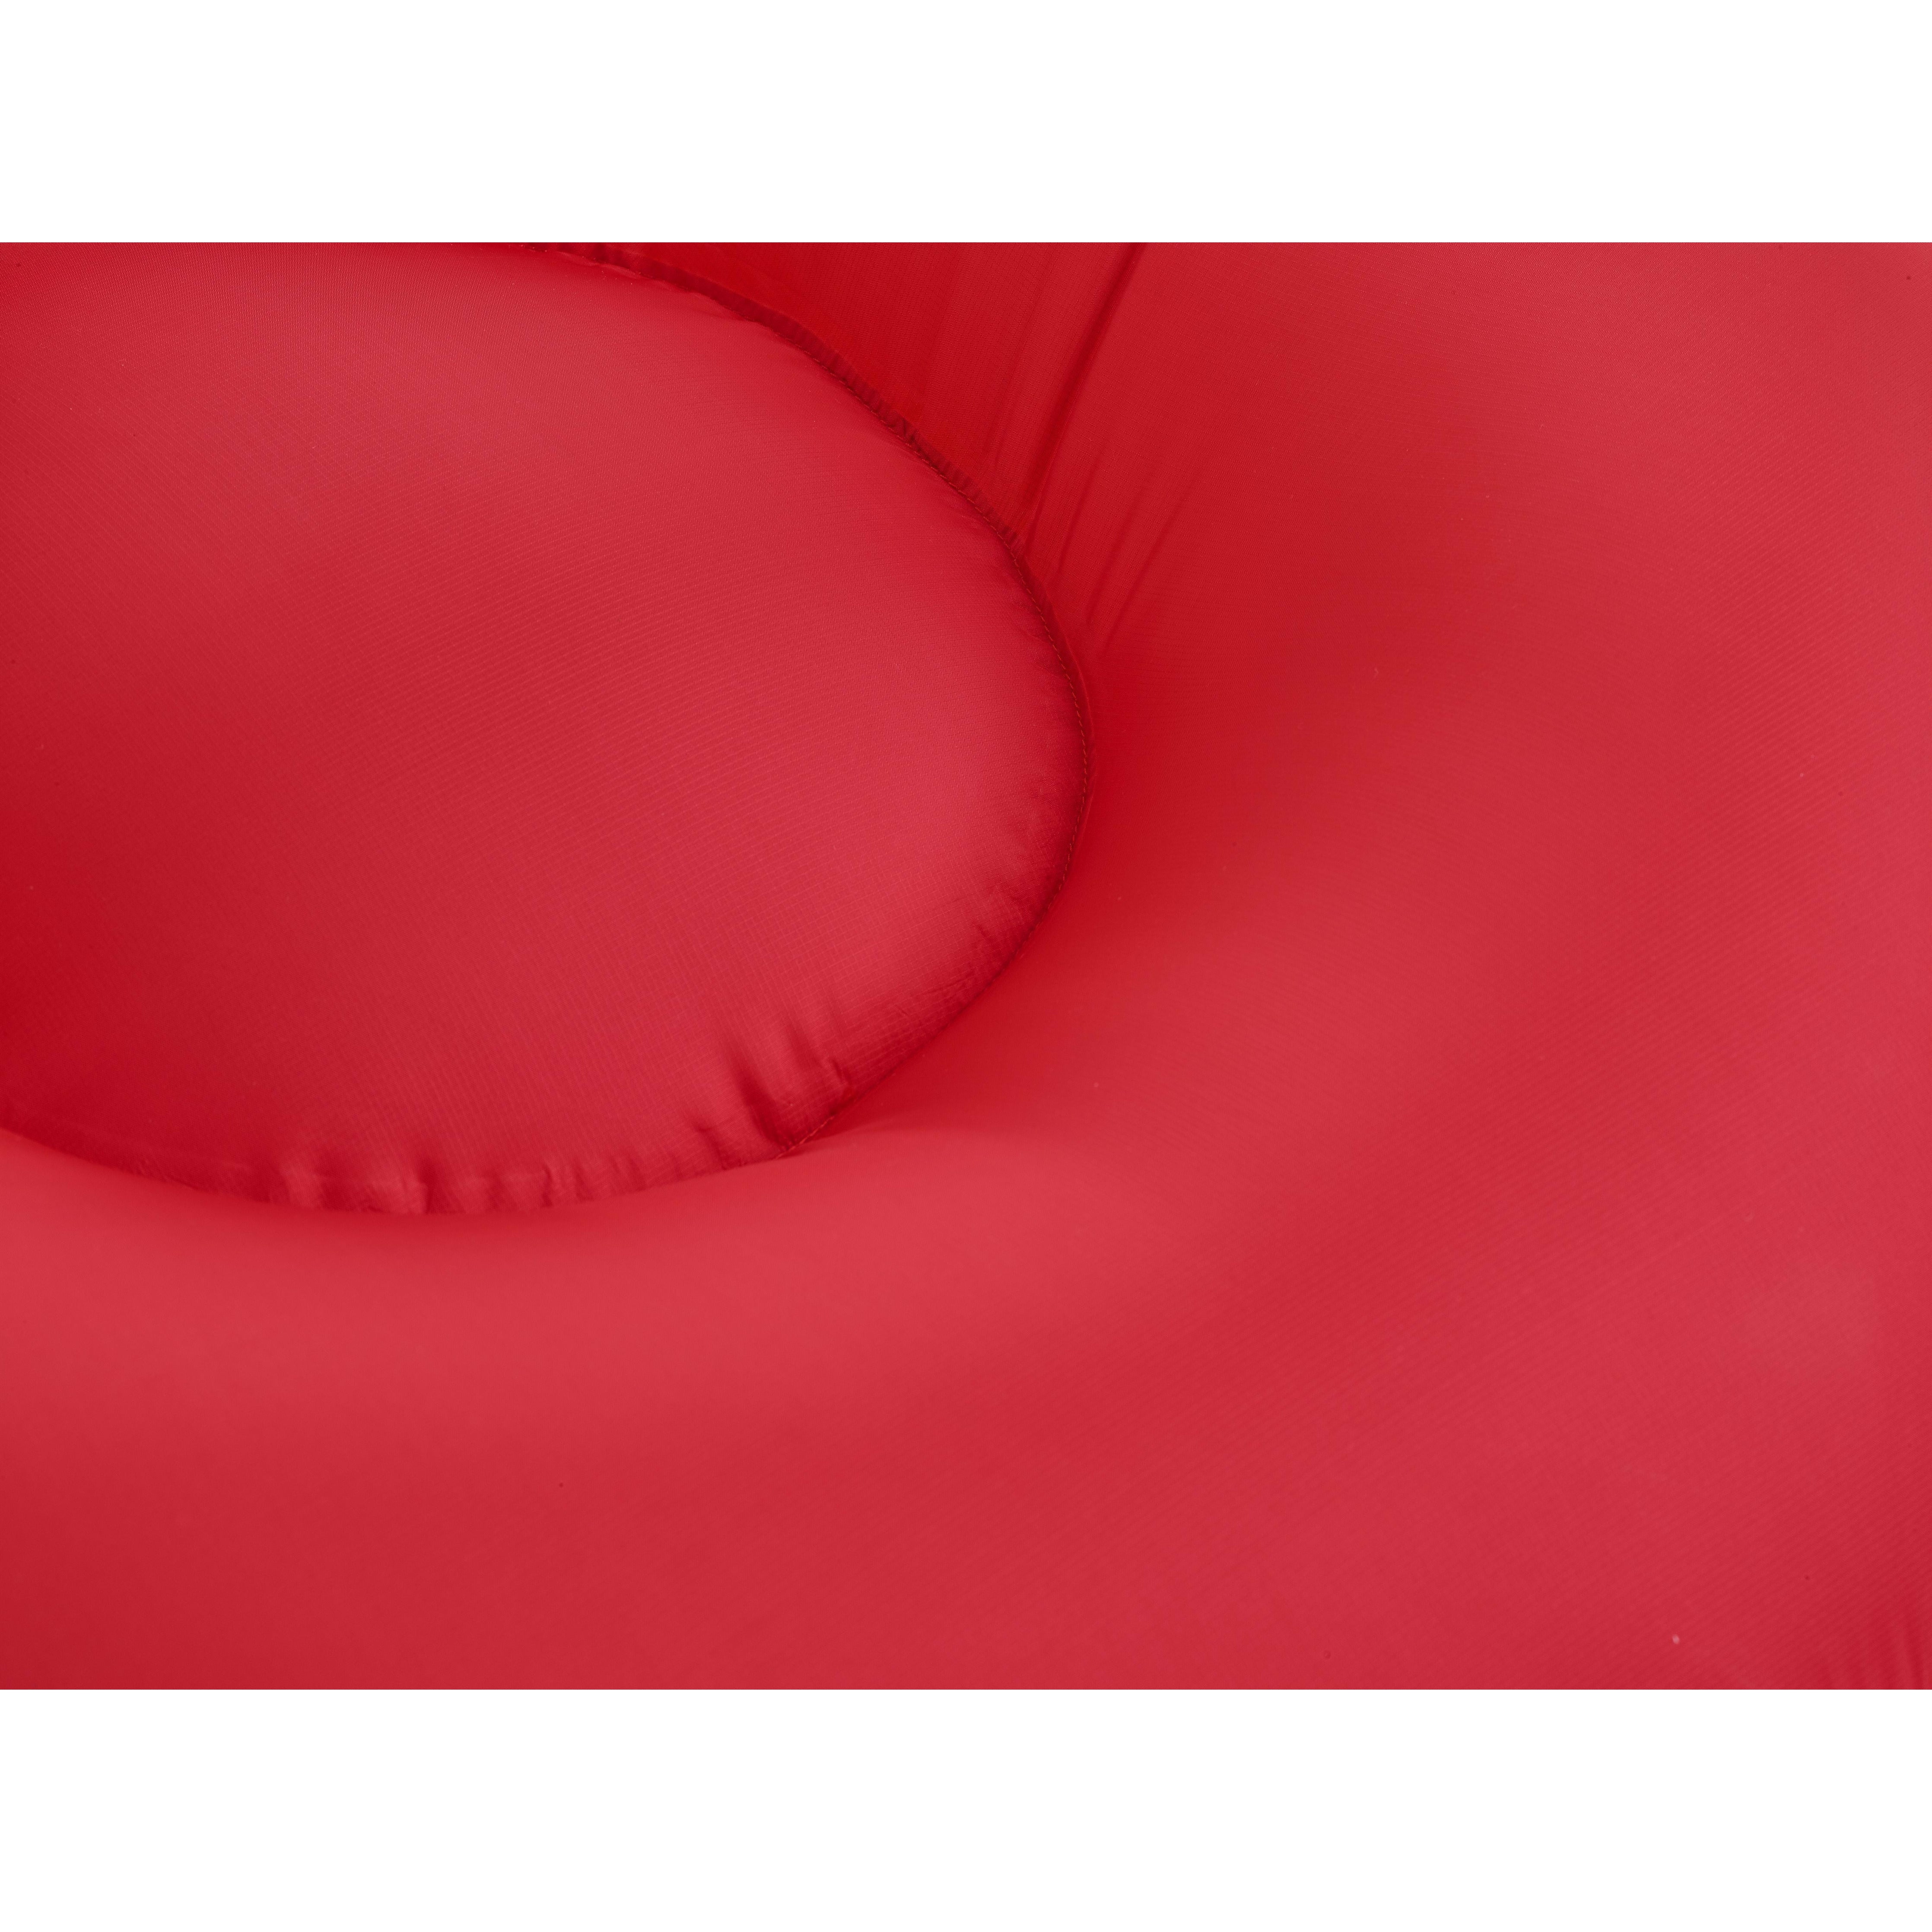 Fatboy Lamzac o asiento inflable 3.0, rojo